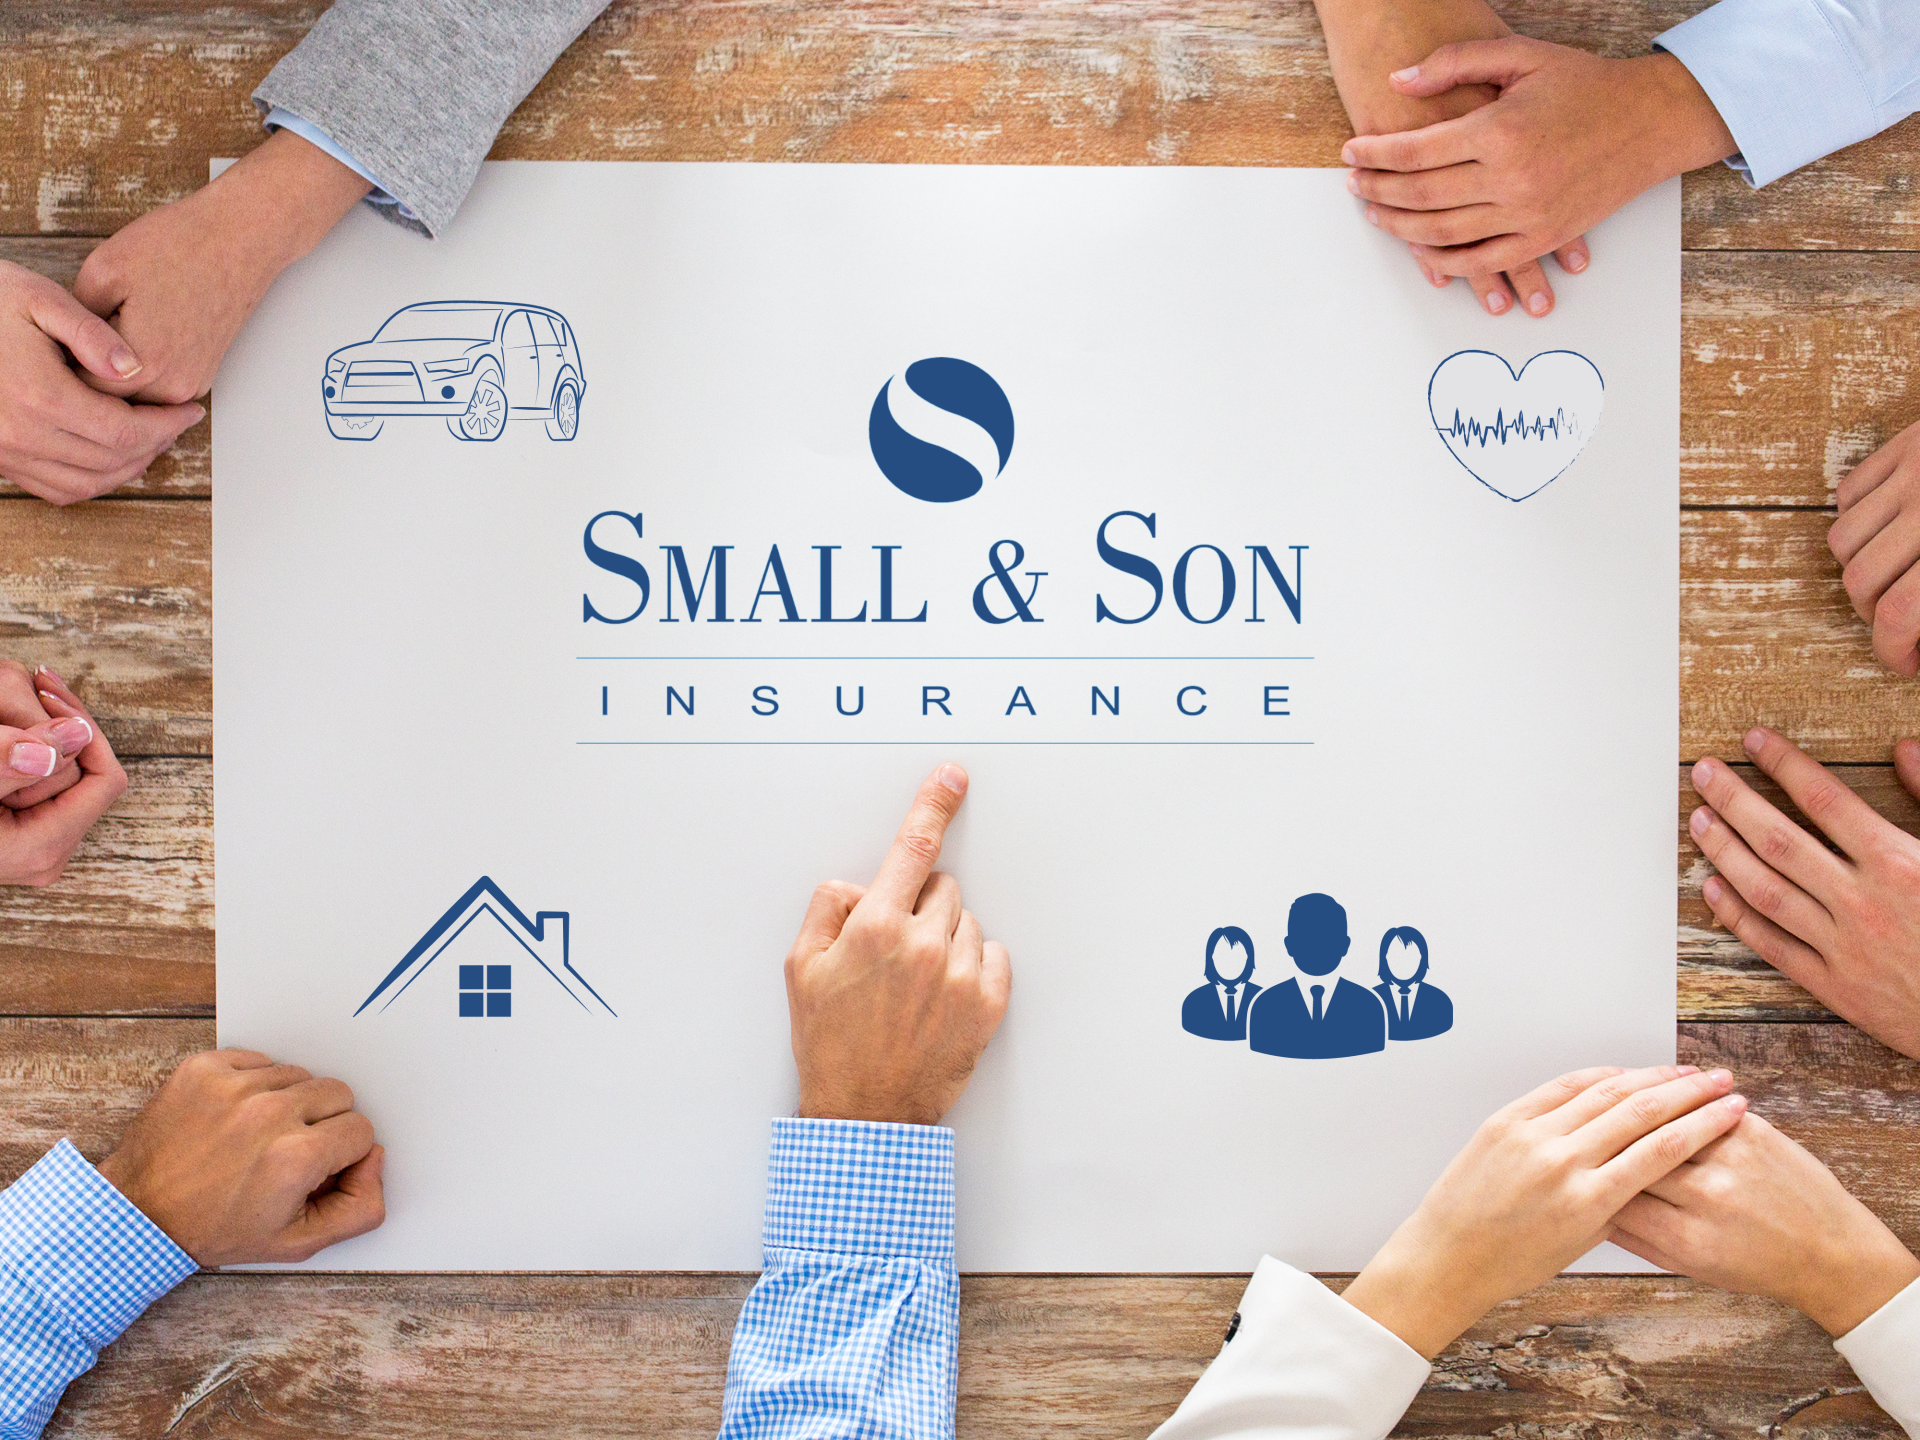 Small & Son Insurance Inc, Stroudsburg Insurance, Auto Insurance, Homeowners Insurance, Small & Son team